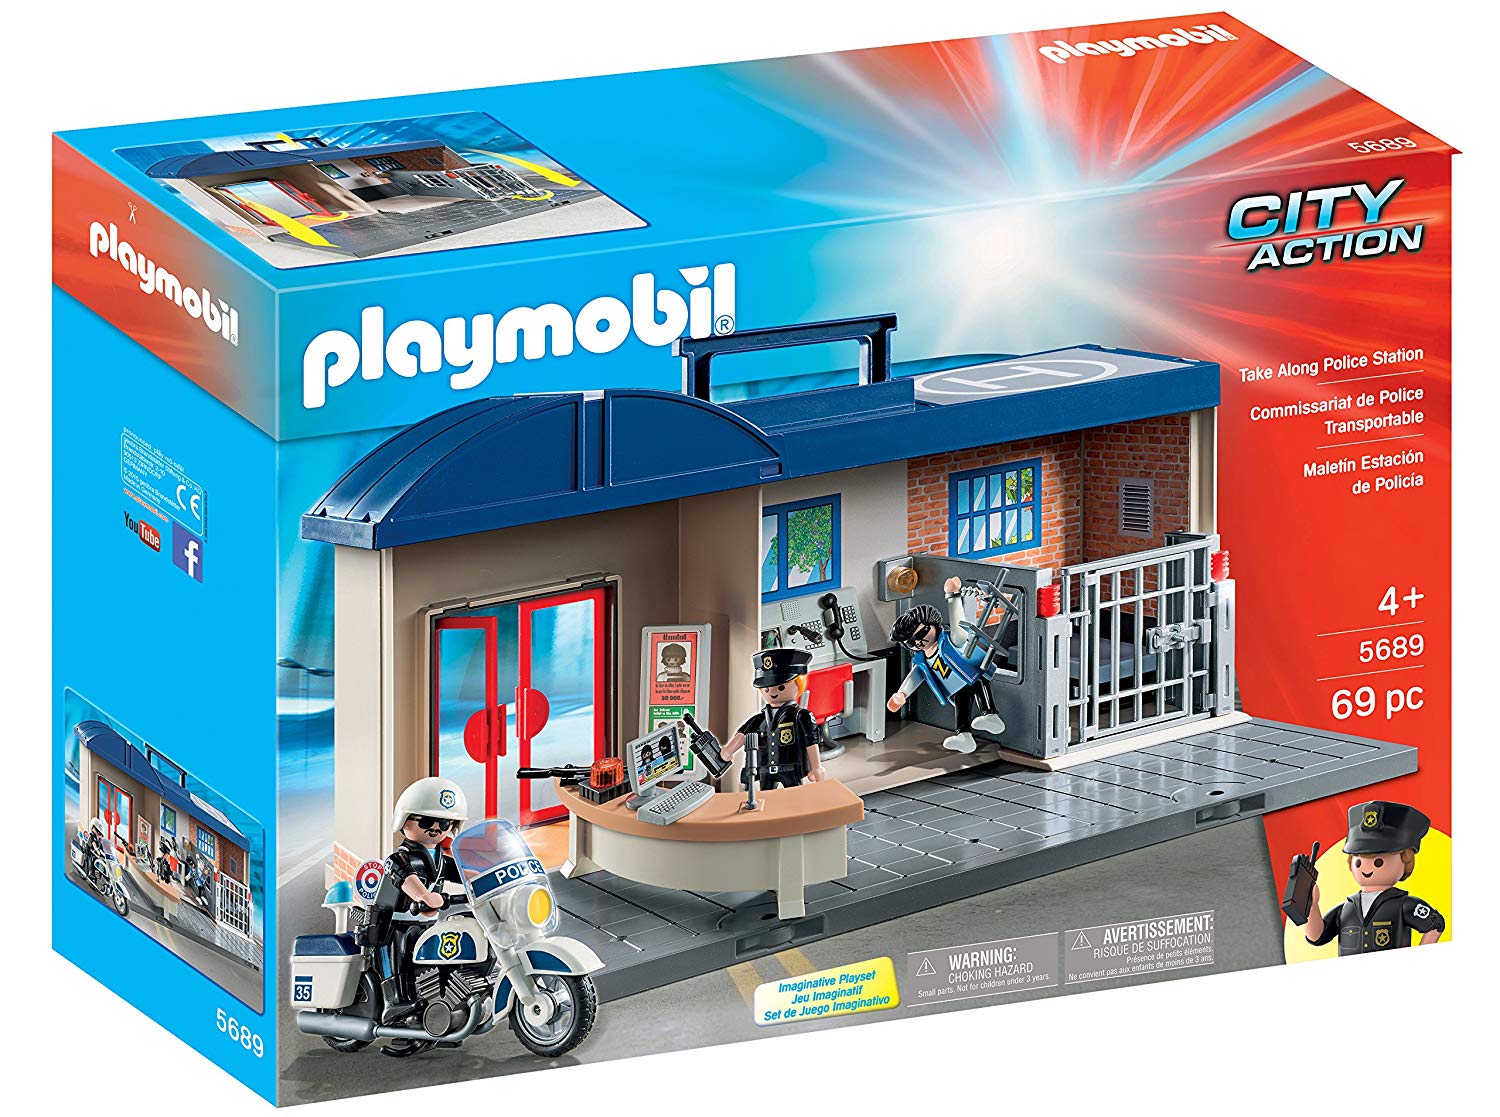 Playmobil Take Along Police Station Playset 4008789056894 Ebay - roblox prison life playset 681326107415 ebay